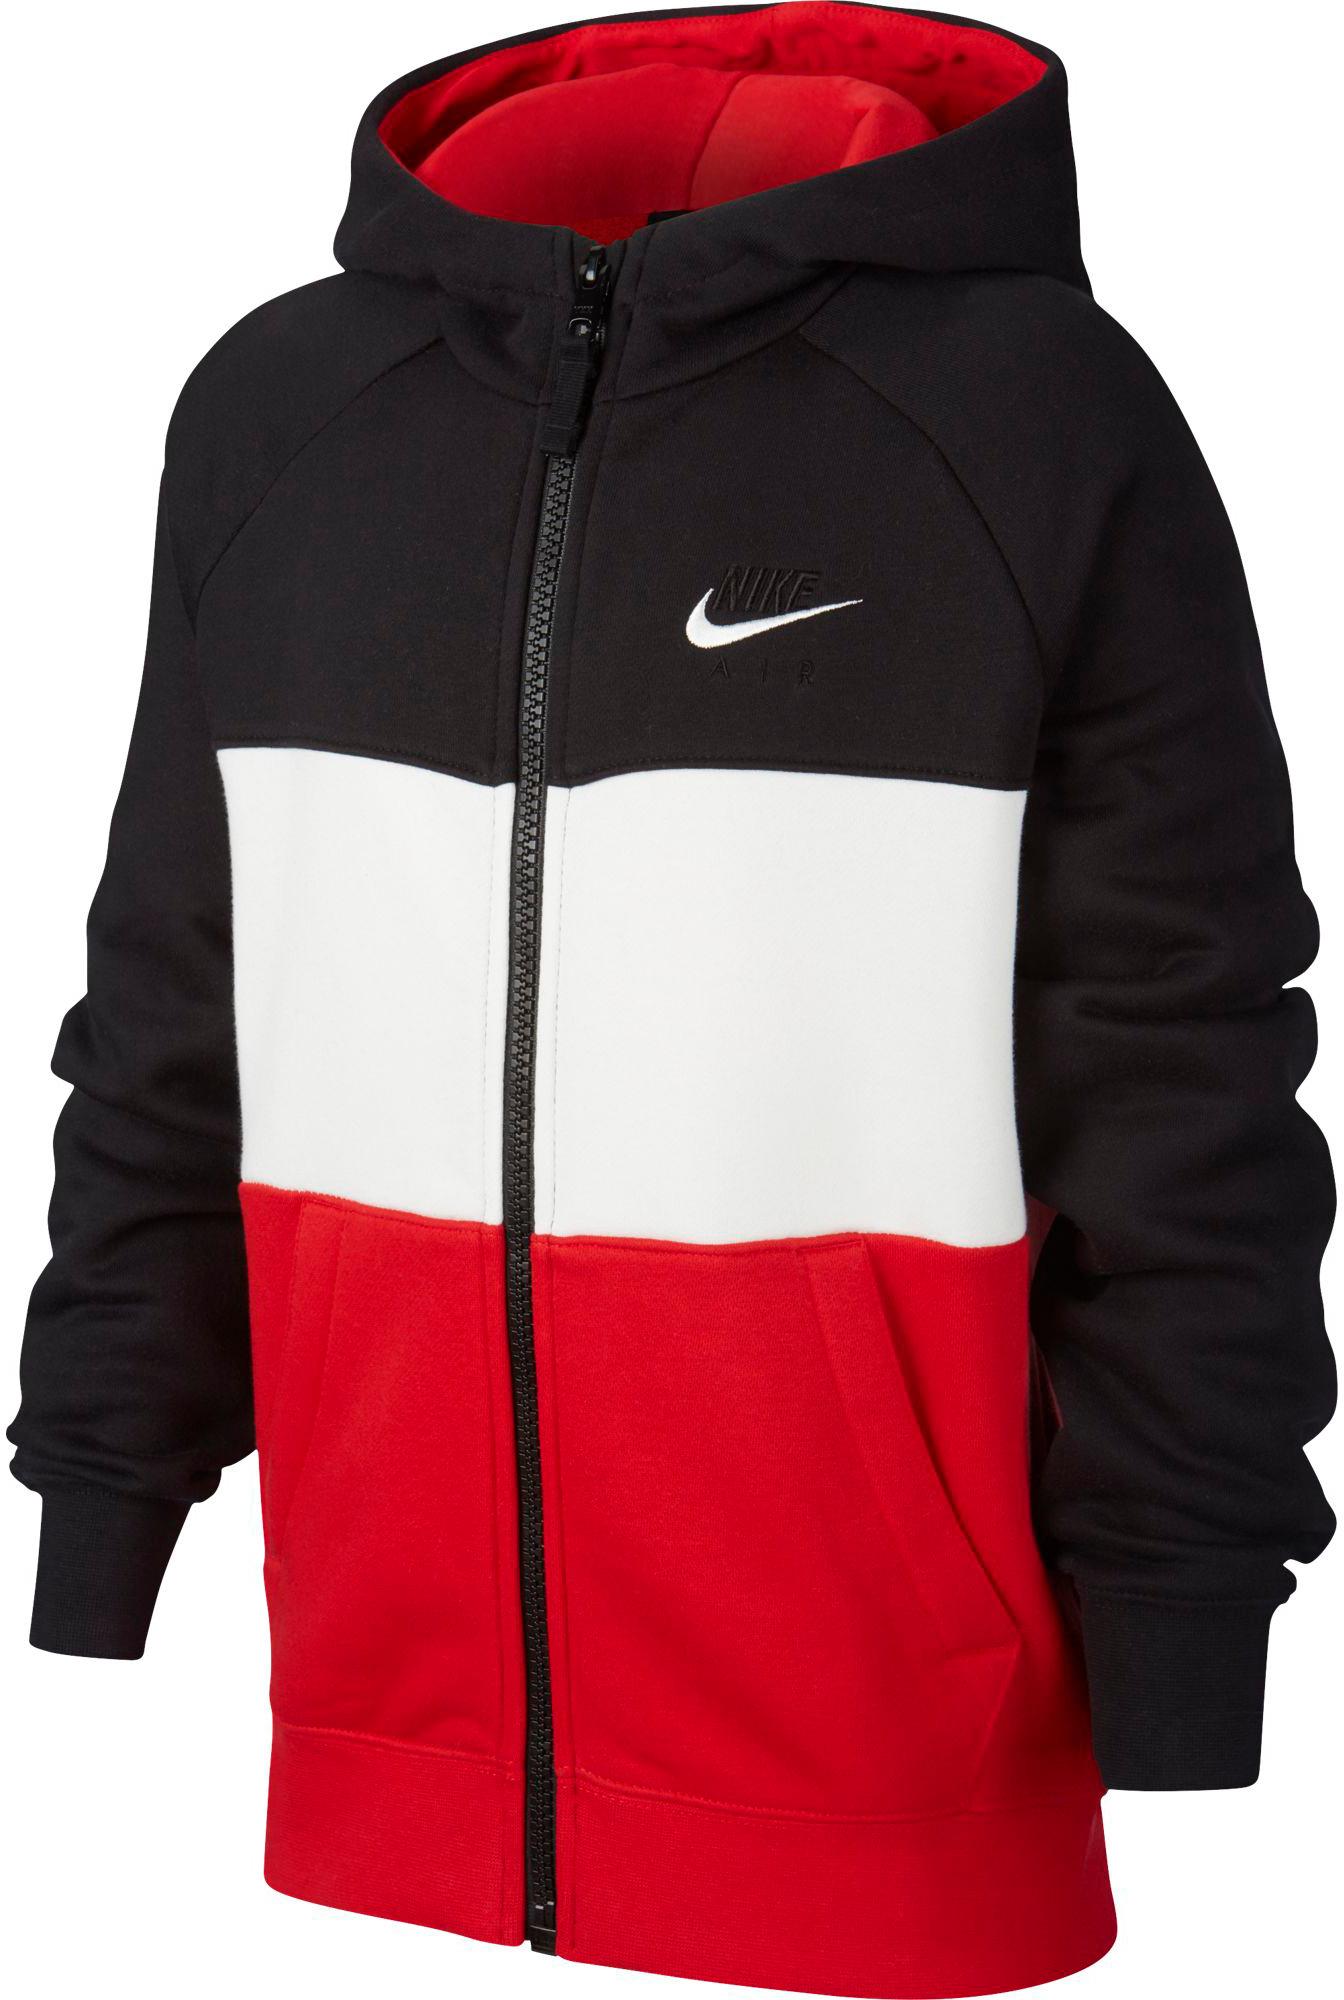 nike red black and white hoodie